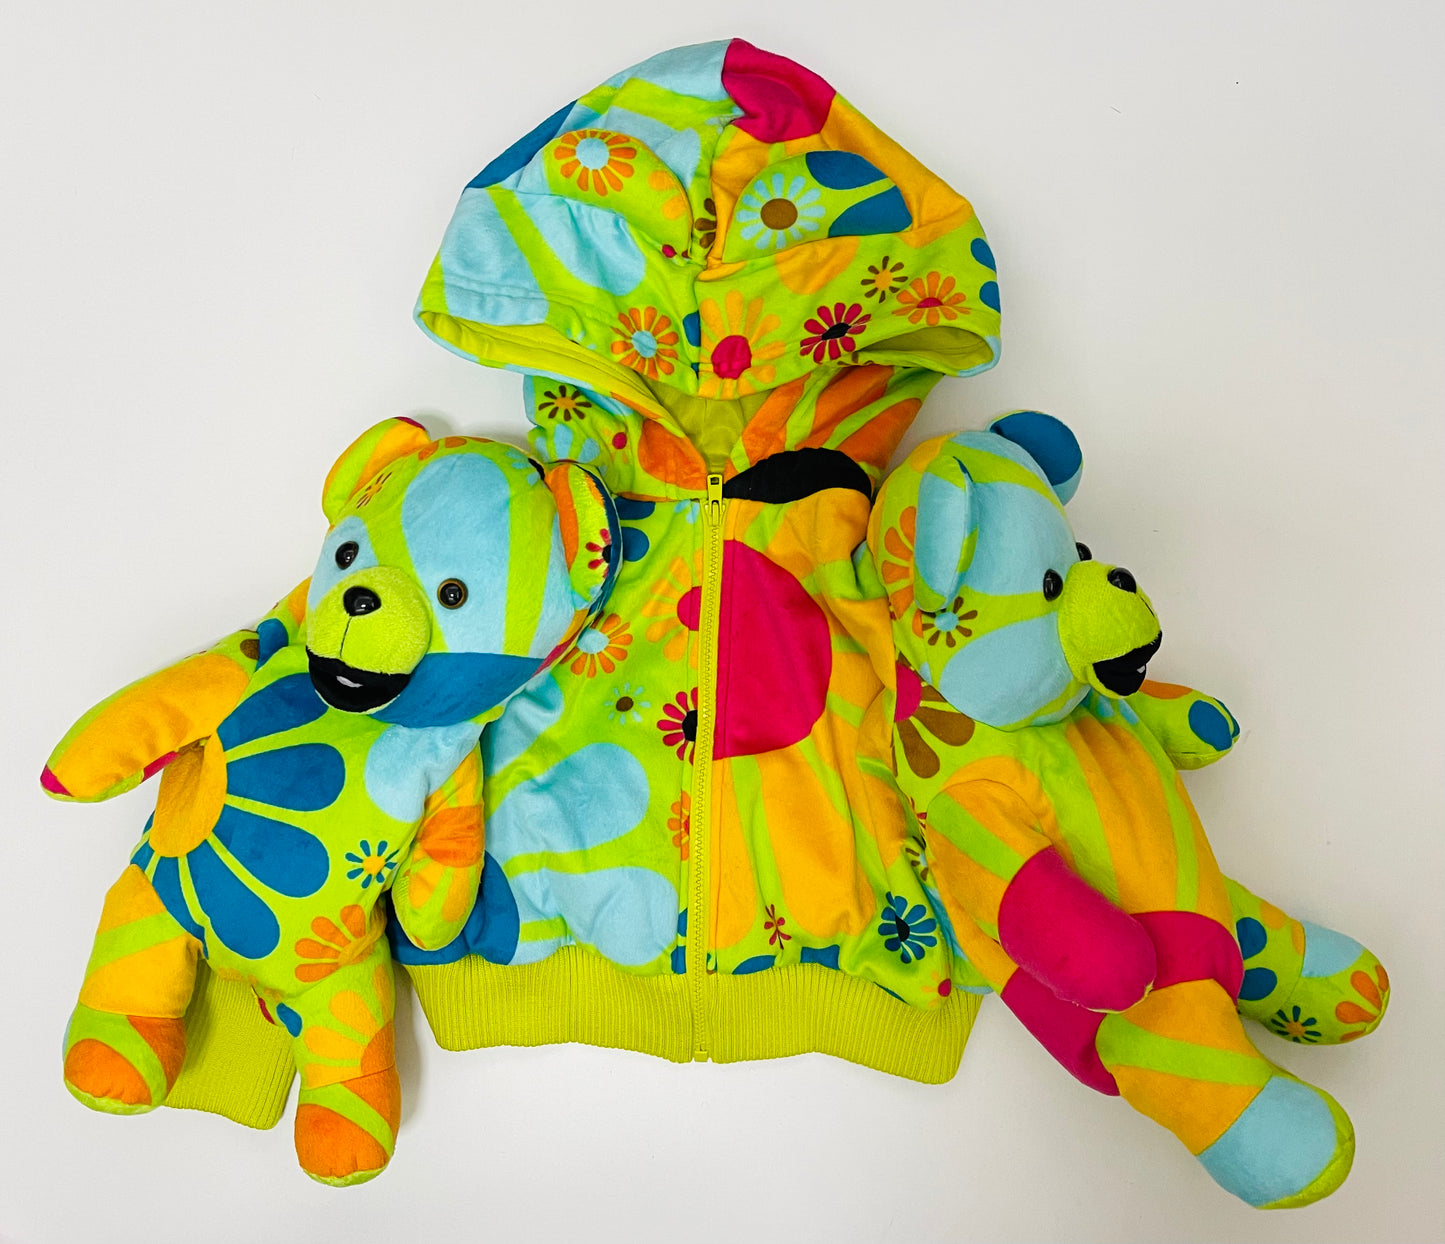 NEW Adidas X Jeremy Scott Teddy Bear Stuffed Toy Yellow Mid Riff Hanging Jumper Bomber Jacket ( Size : M )